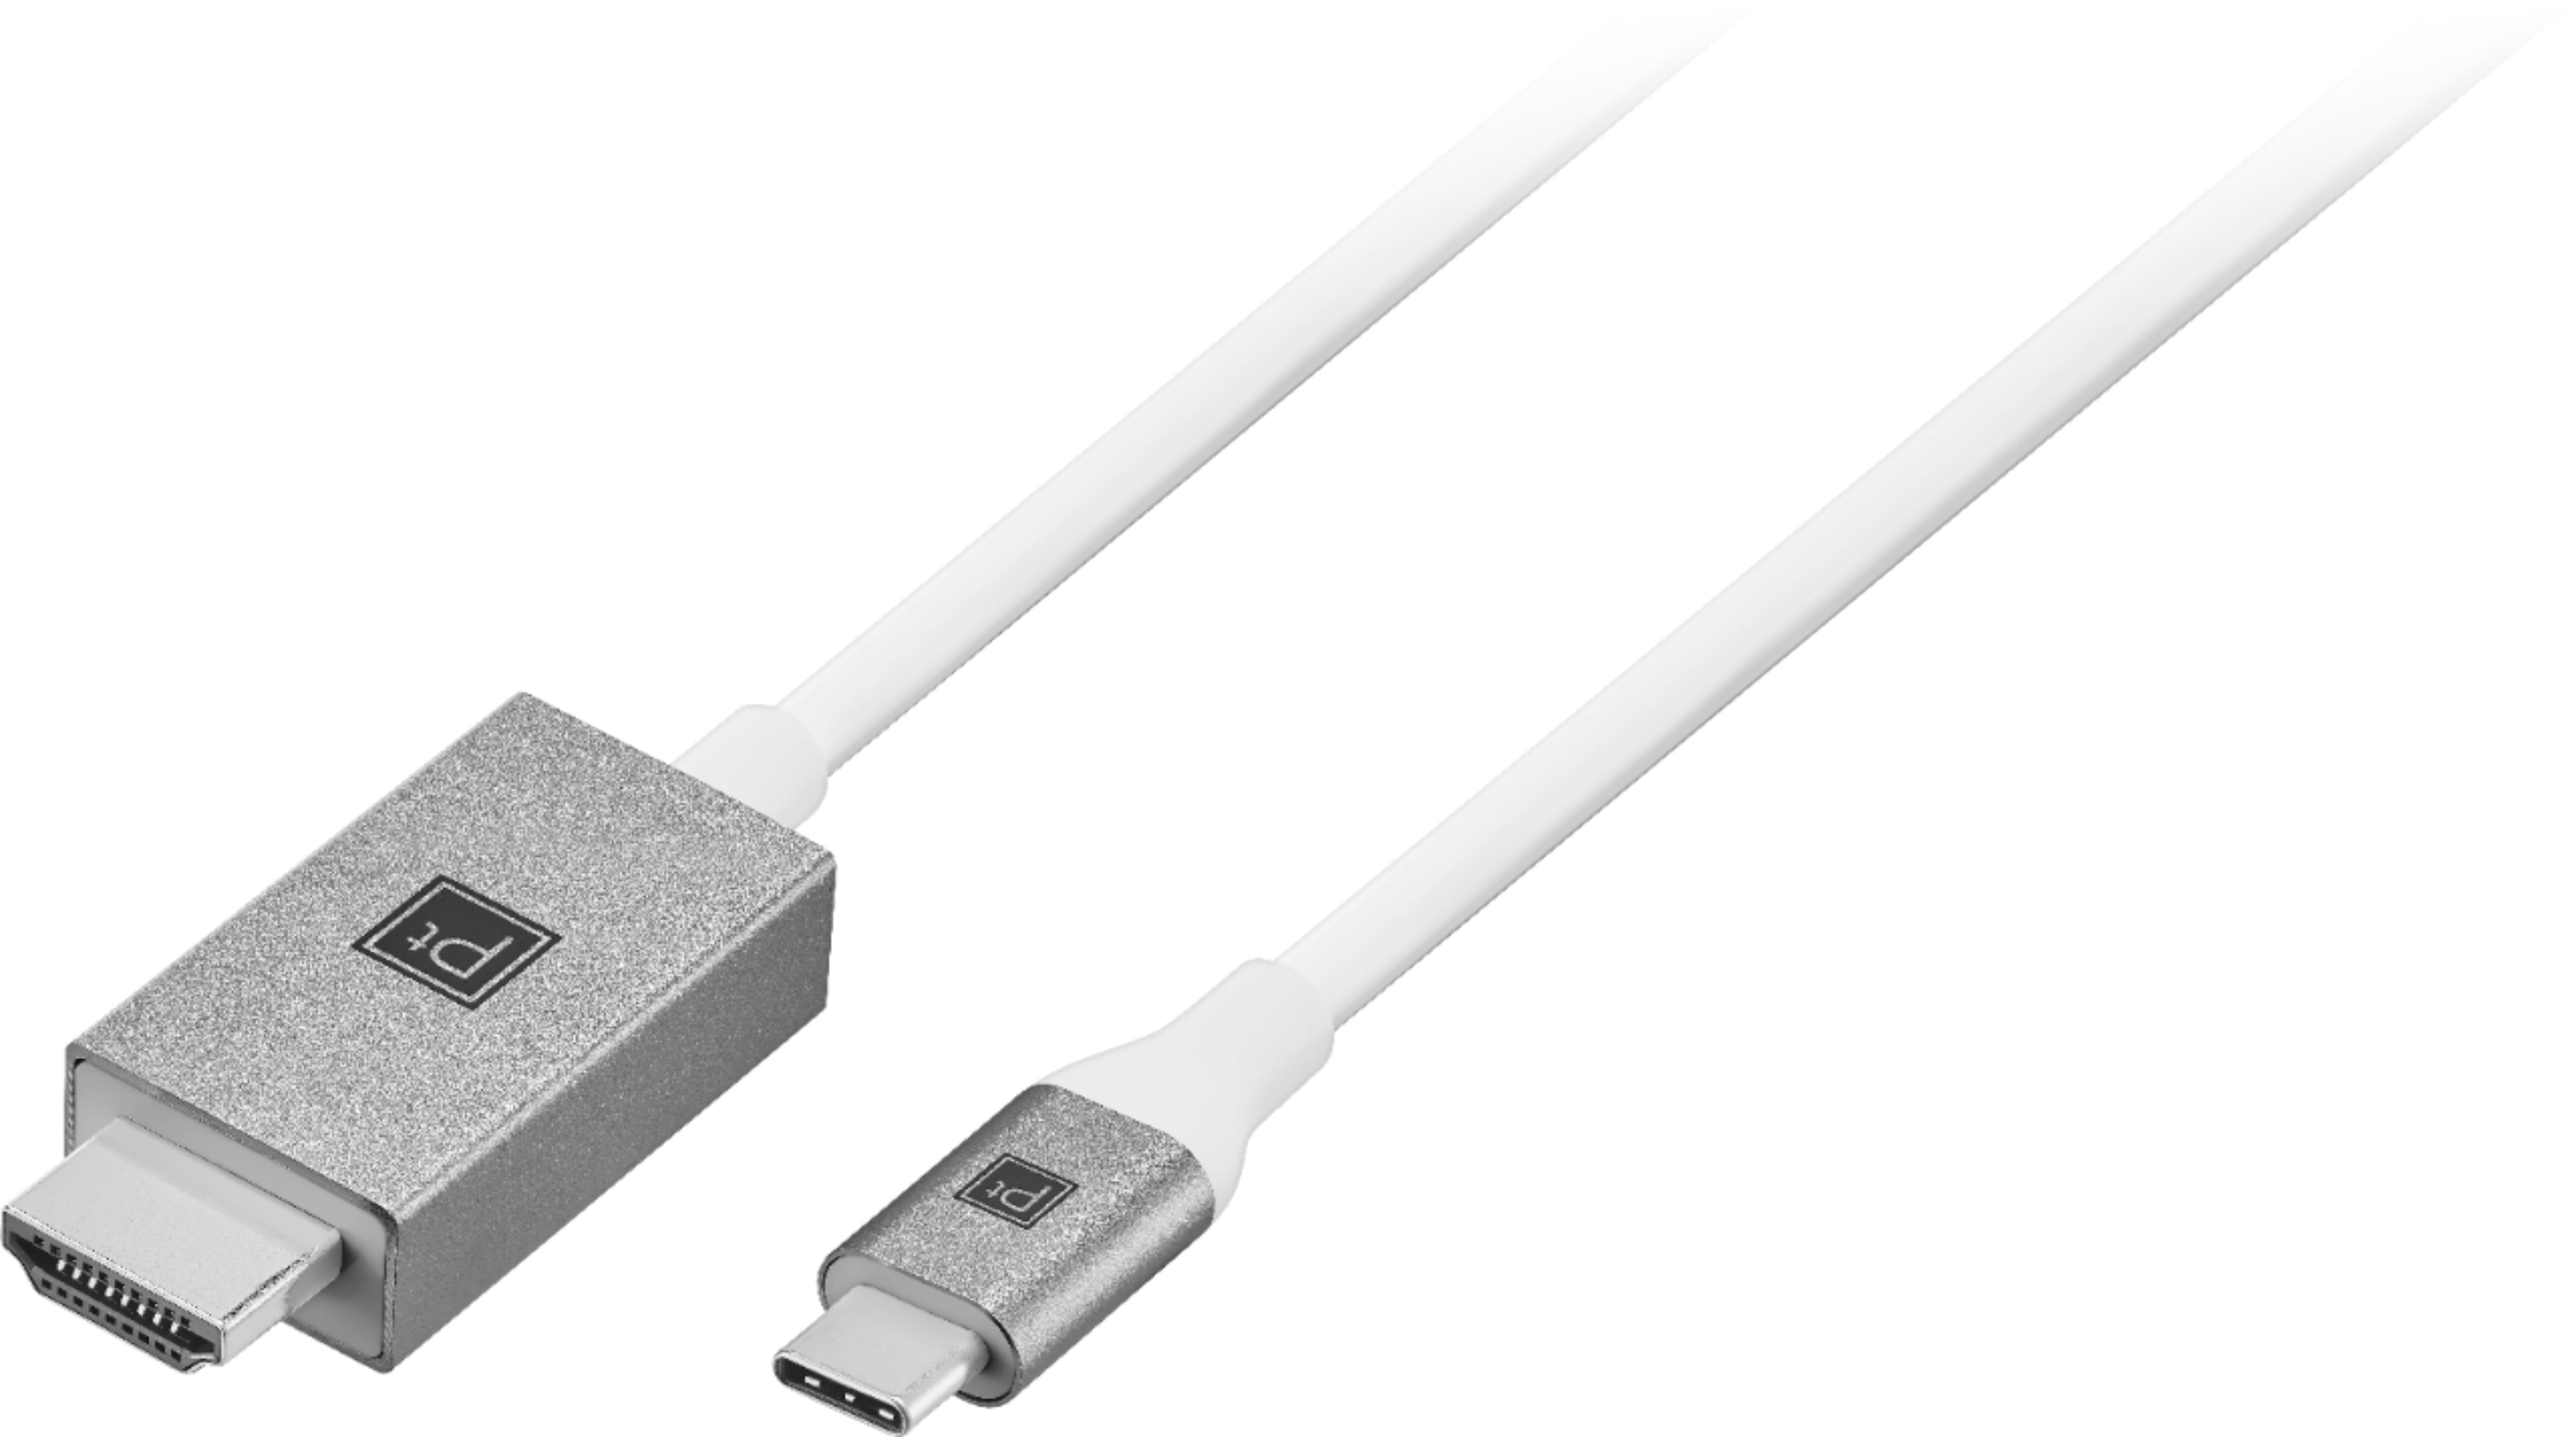 USB C to HDMI Cable 6FT 4K@60Hz USB Type C to HDMI Cable for MacBook Pro  MacBook Air iPad Pro iMac ChromeBook Pixel (UPGROWCMHM6)